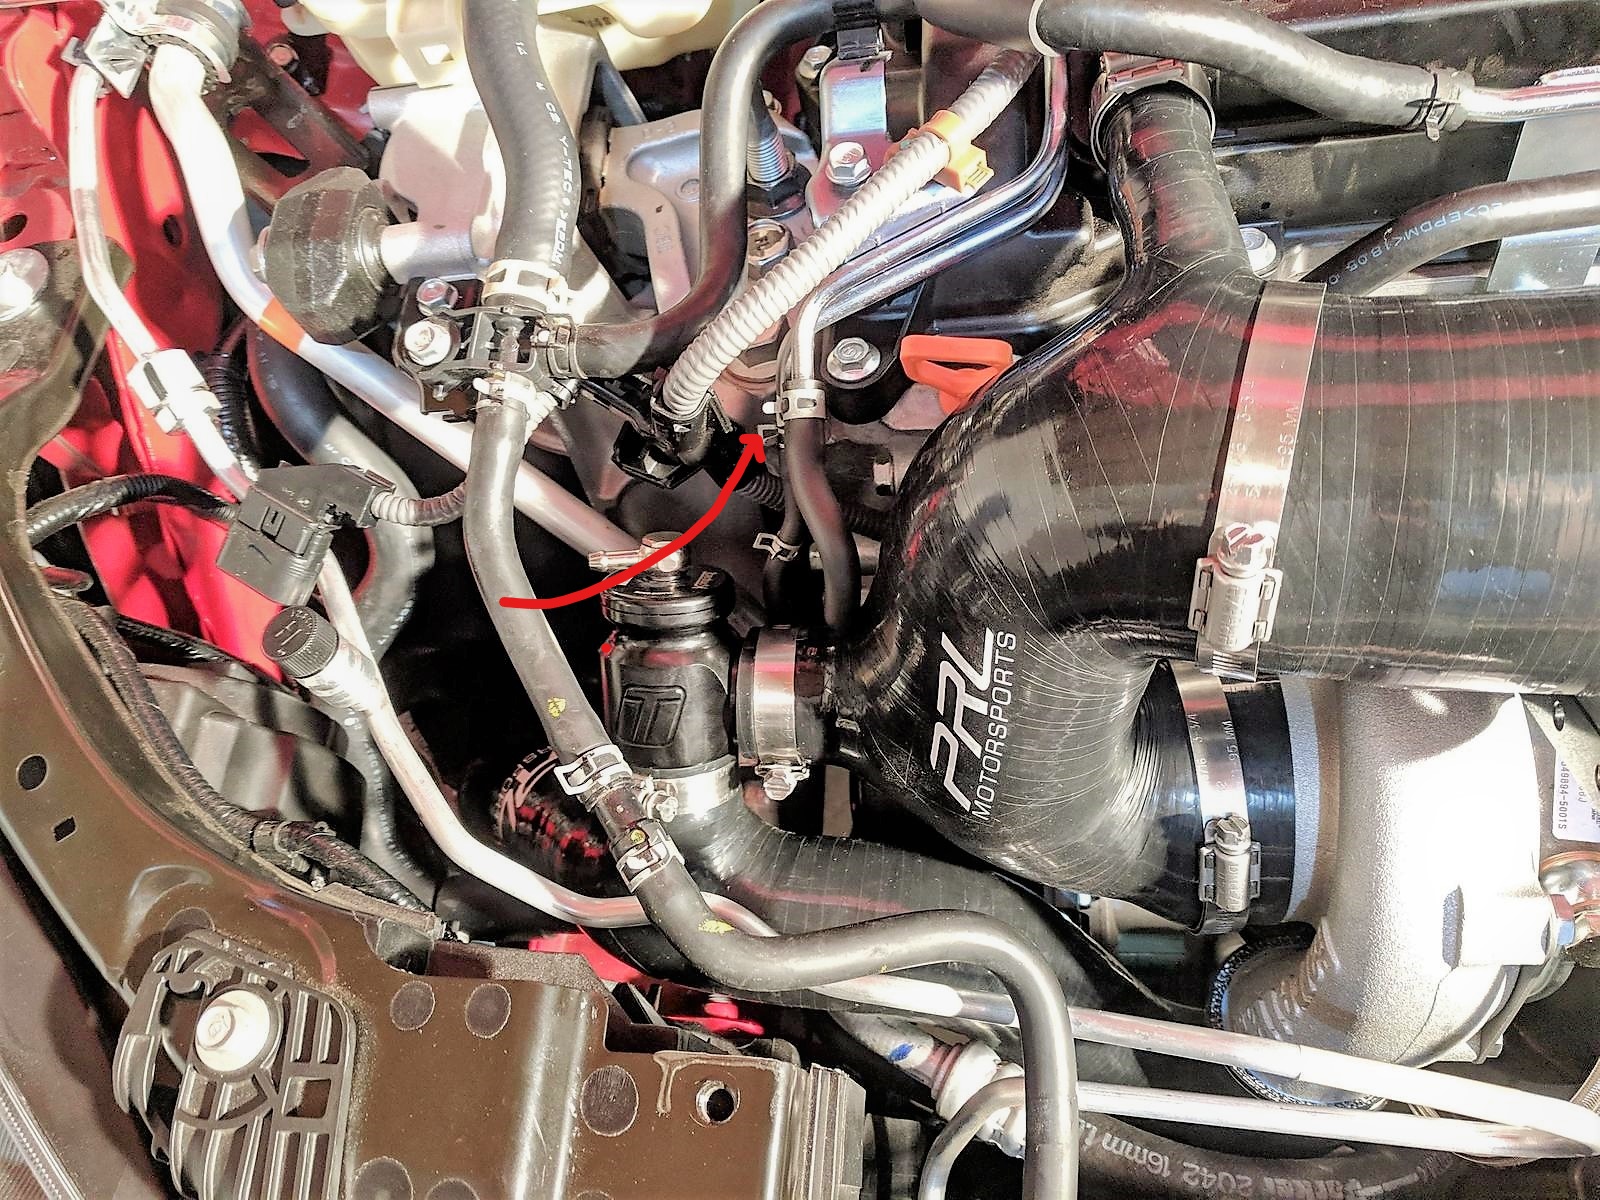 Honda Civic 10th gen PRL Motorsports 1.5T Civic Bolt-On Big Turbo Kit Upgrade Results InkedPRL